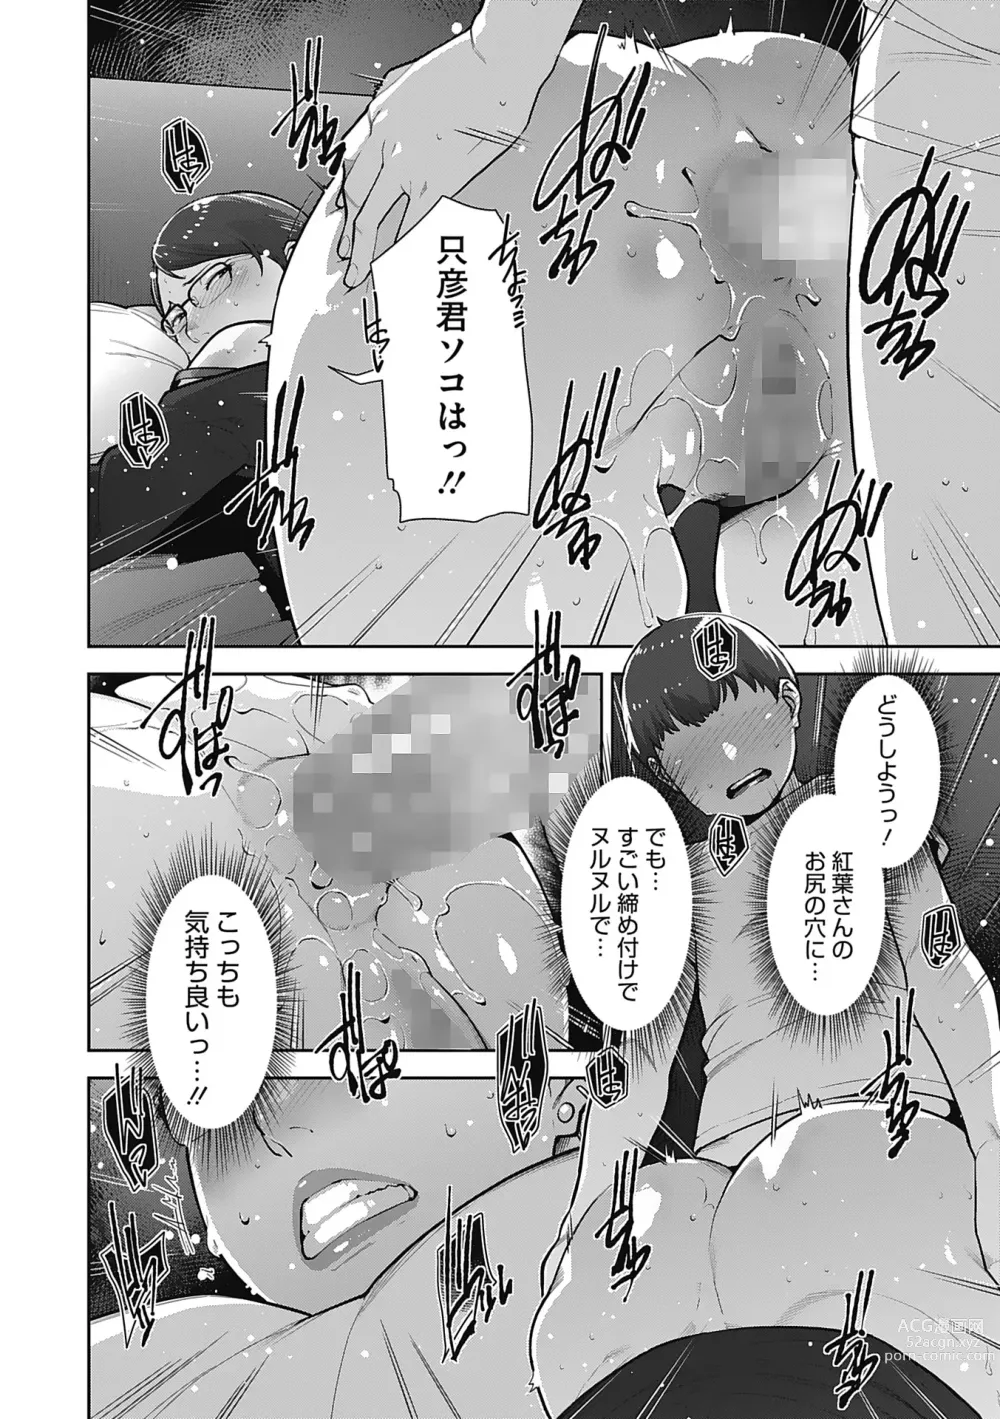 Page 82 of manga Hatsujou Contrast